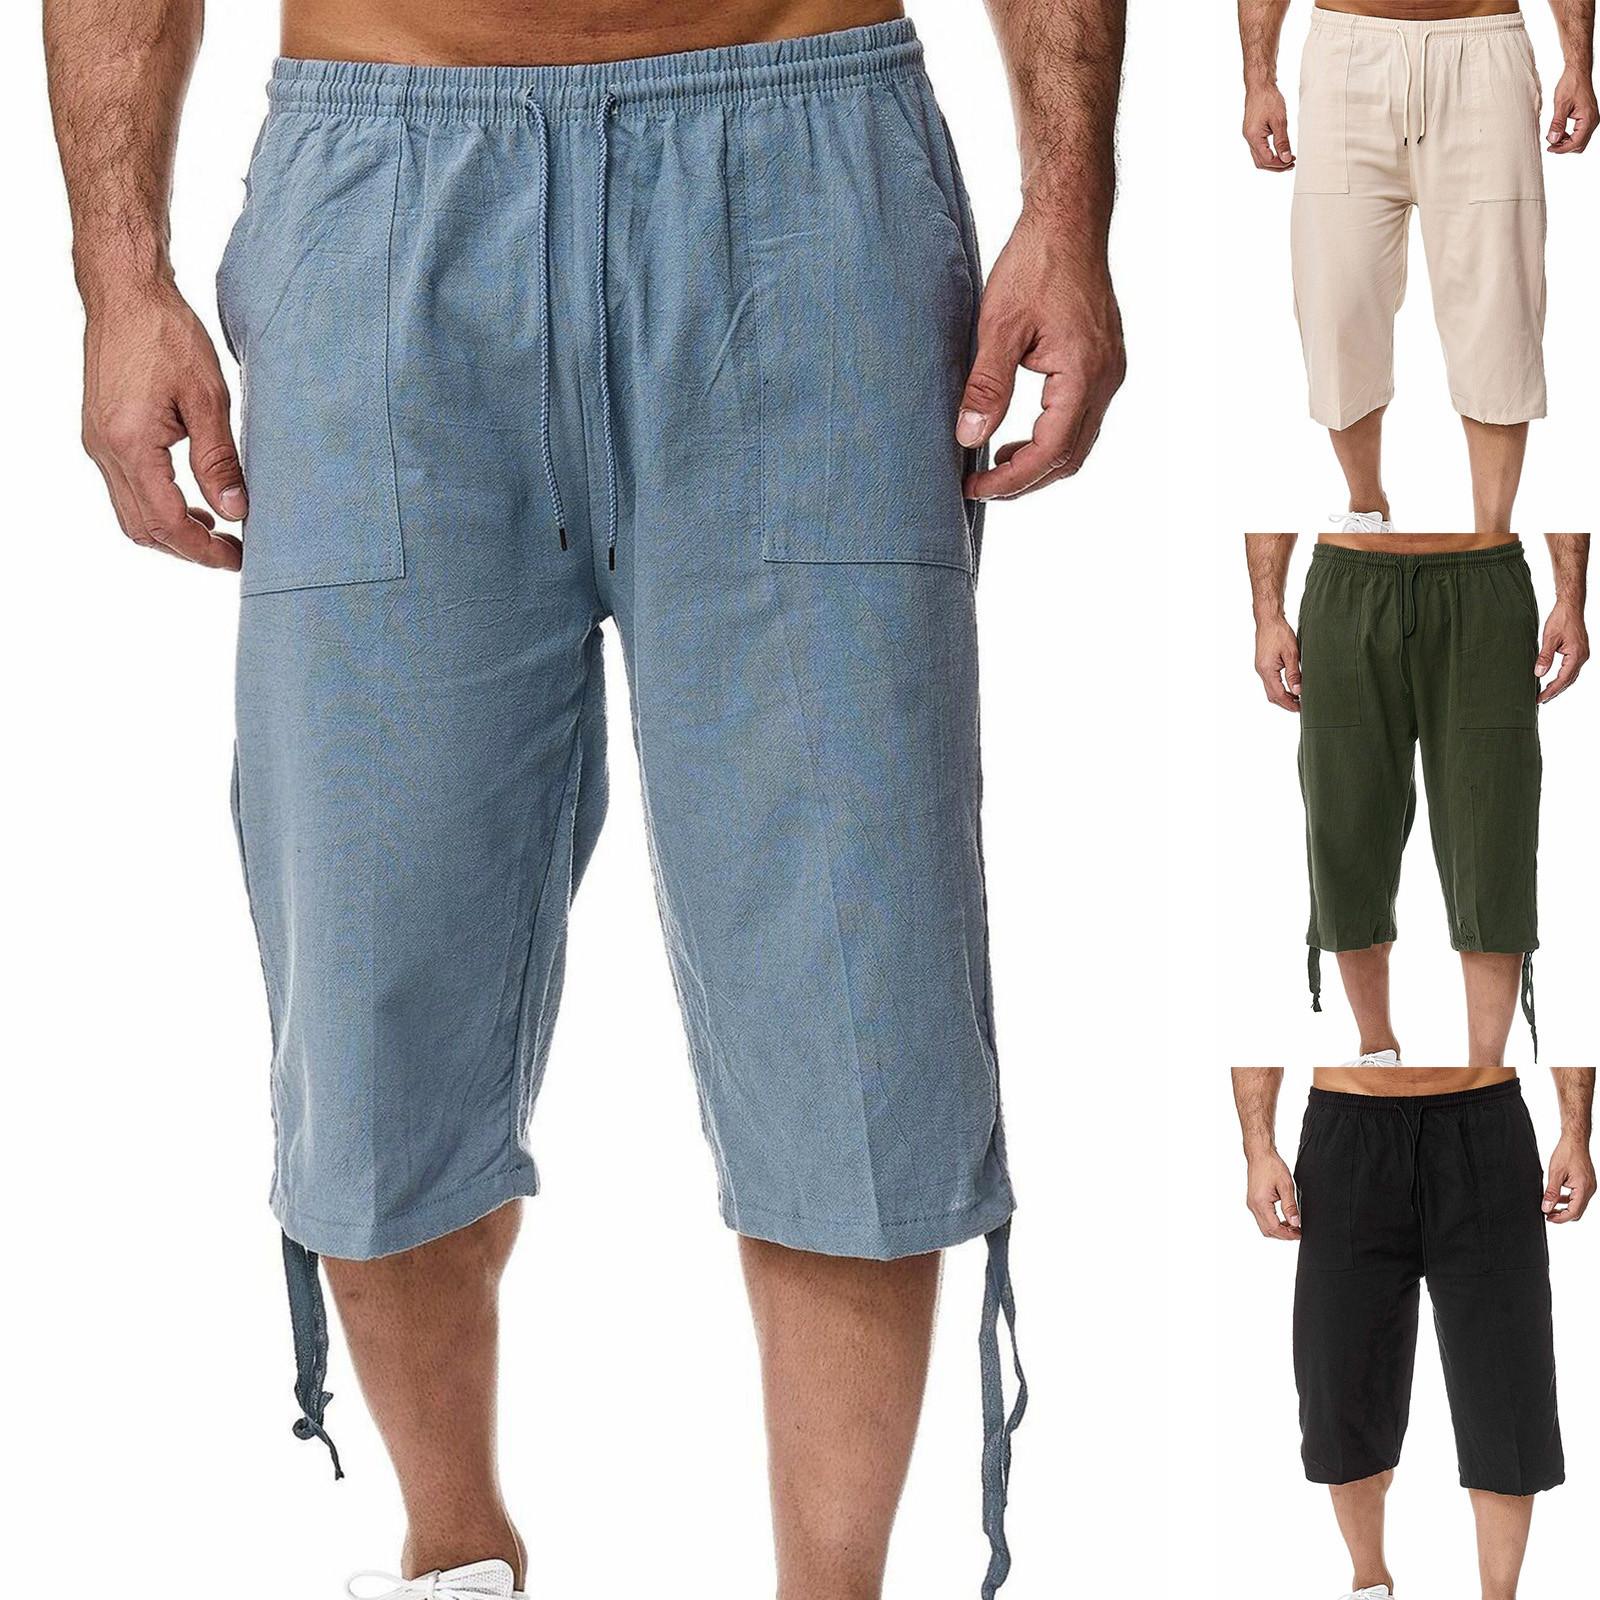 Mei hua Mannen Casual losse katoenen linnen broek elastische strand shorts effen kleur katoen linnen cropped broek